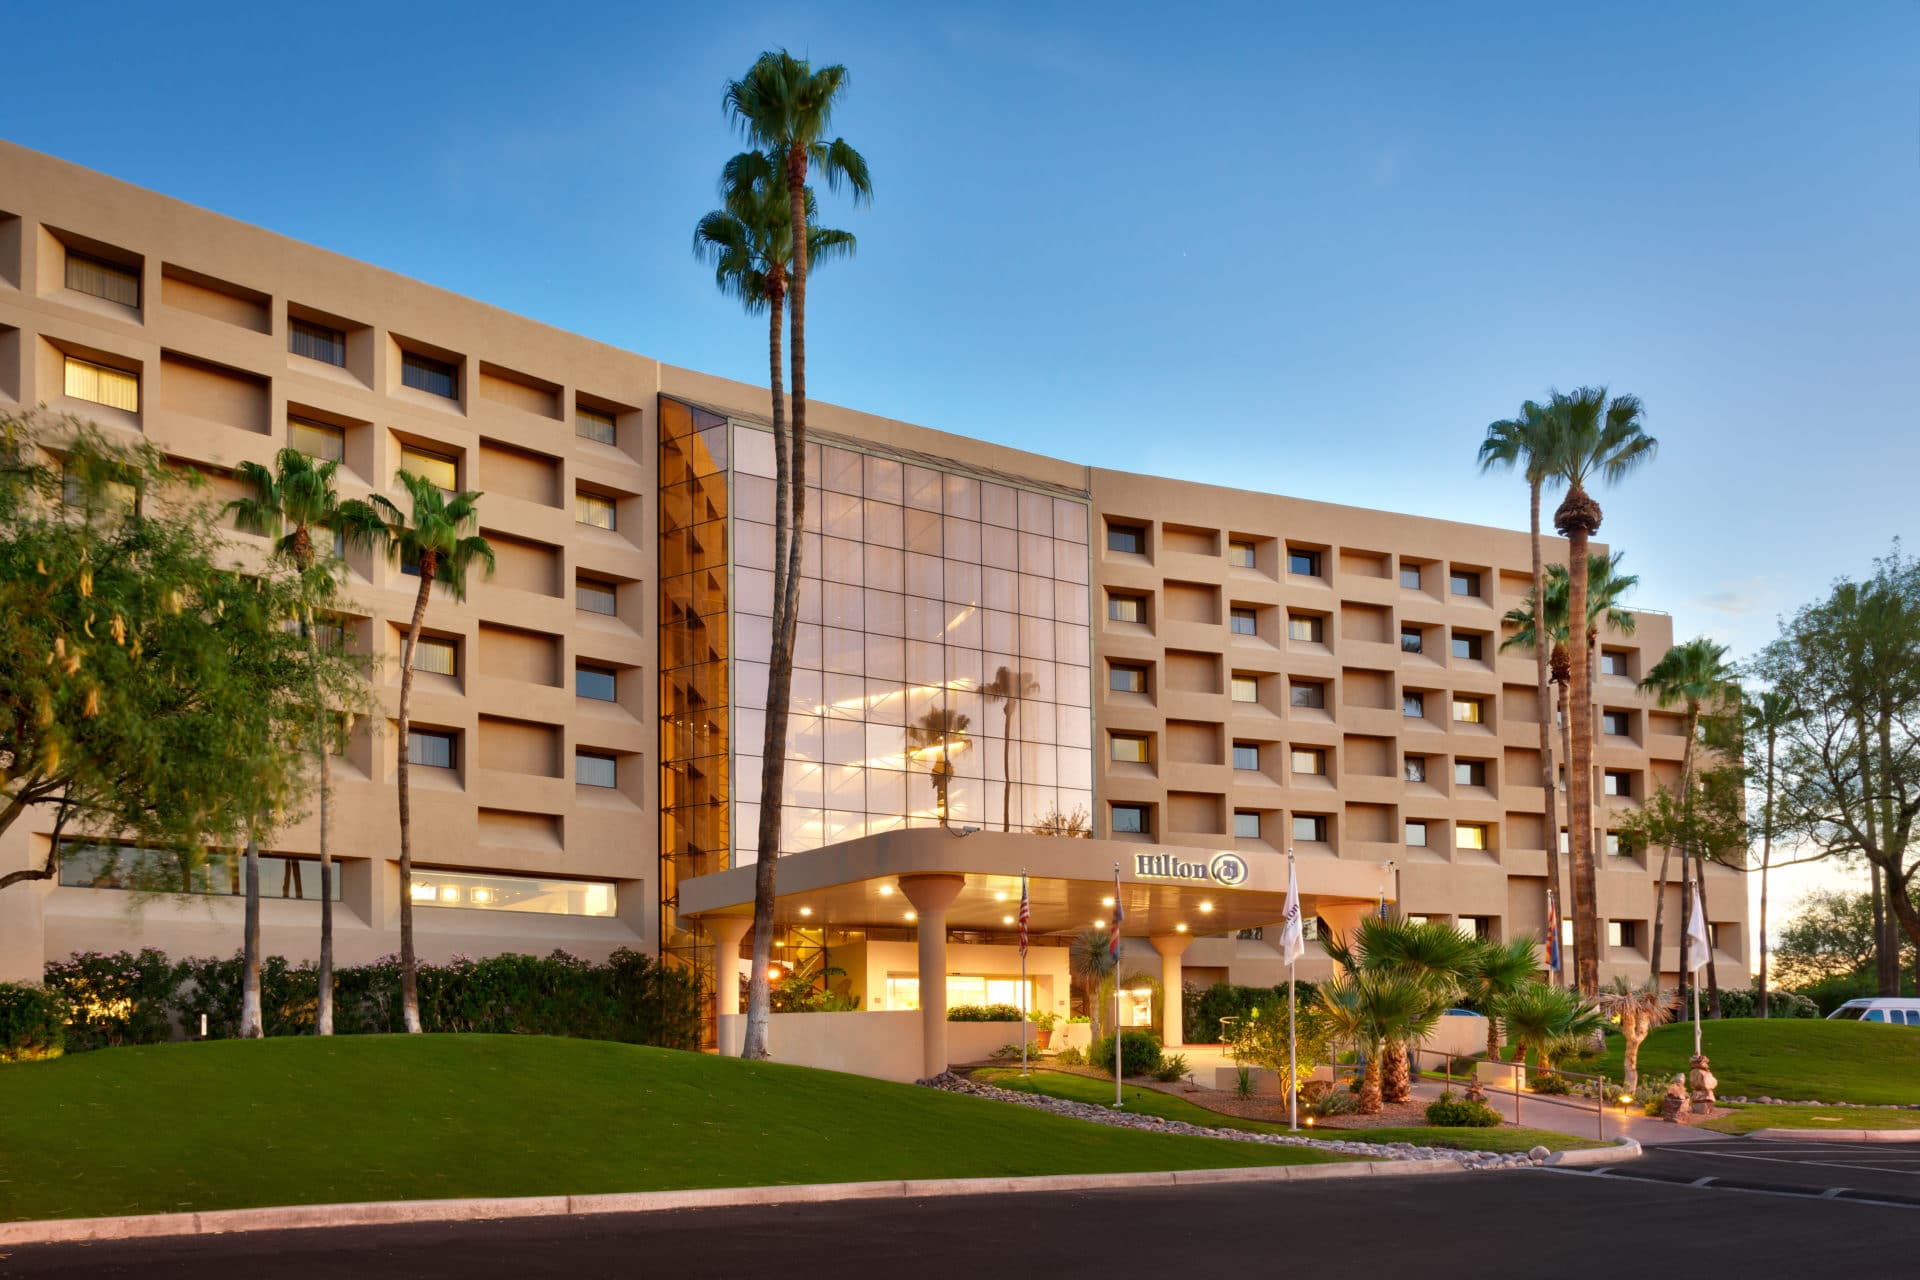 Hilton-Tucson-East-a-Hospitality-Asset-Developed-by-Caliber